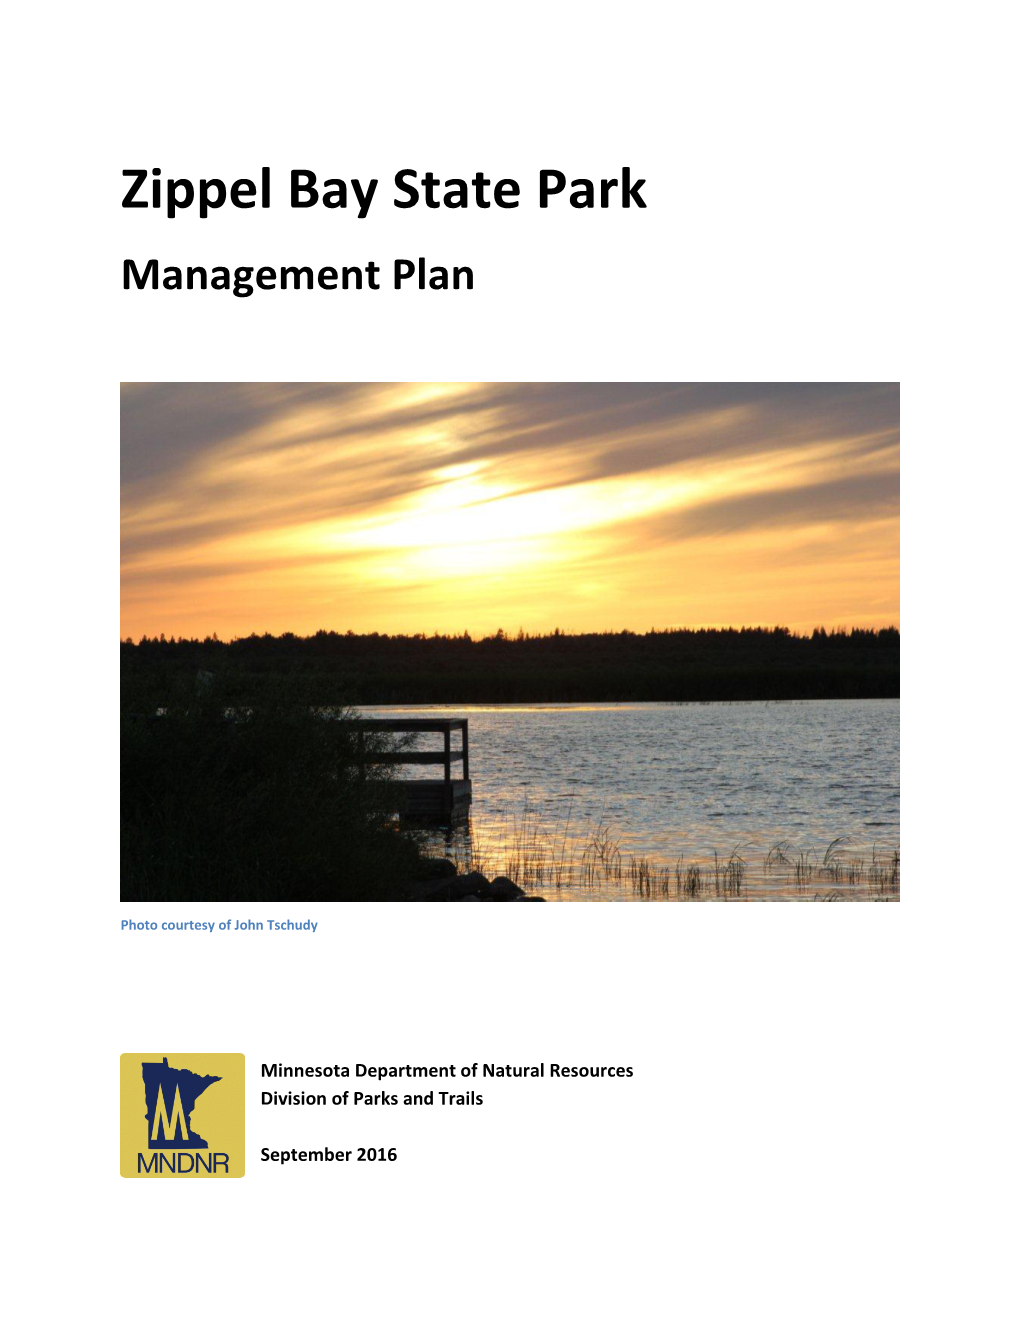 Zippel Bay State Park Management Plan